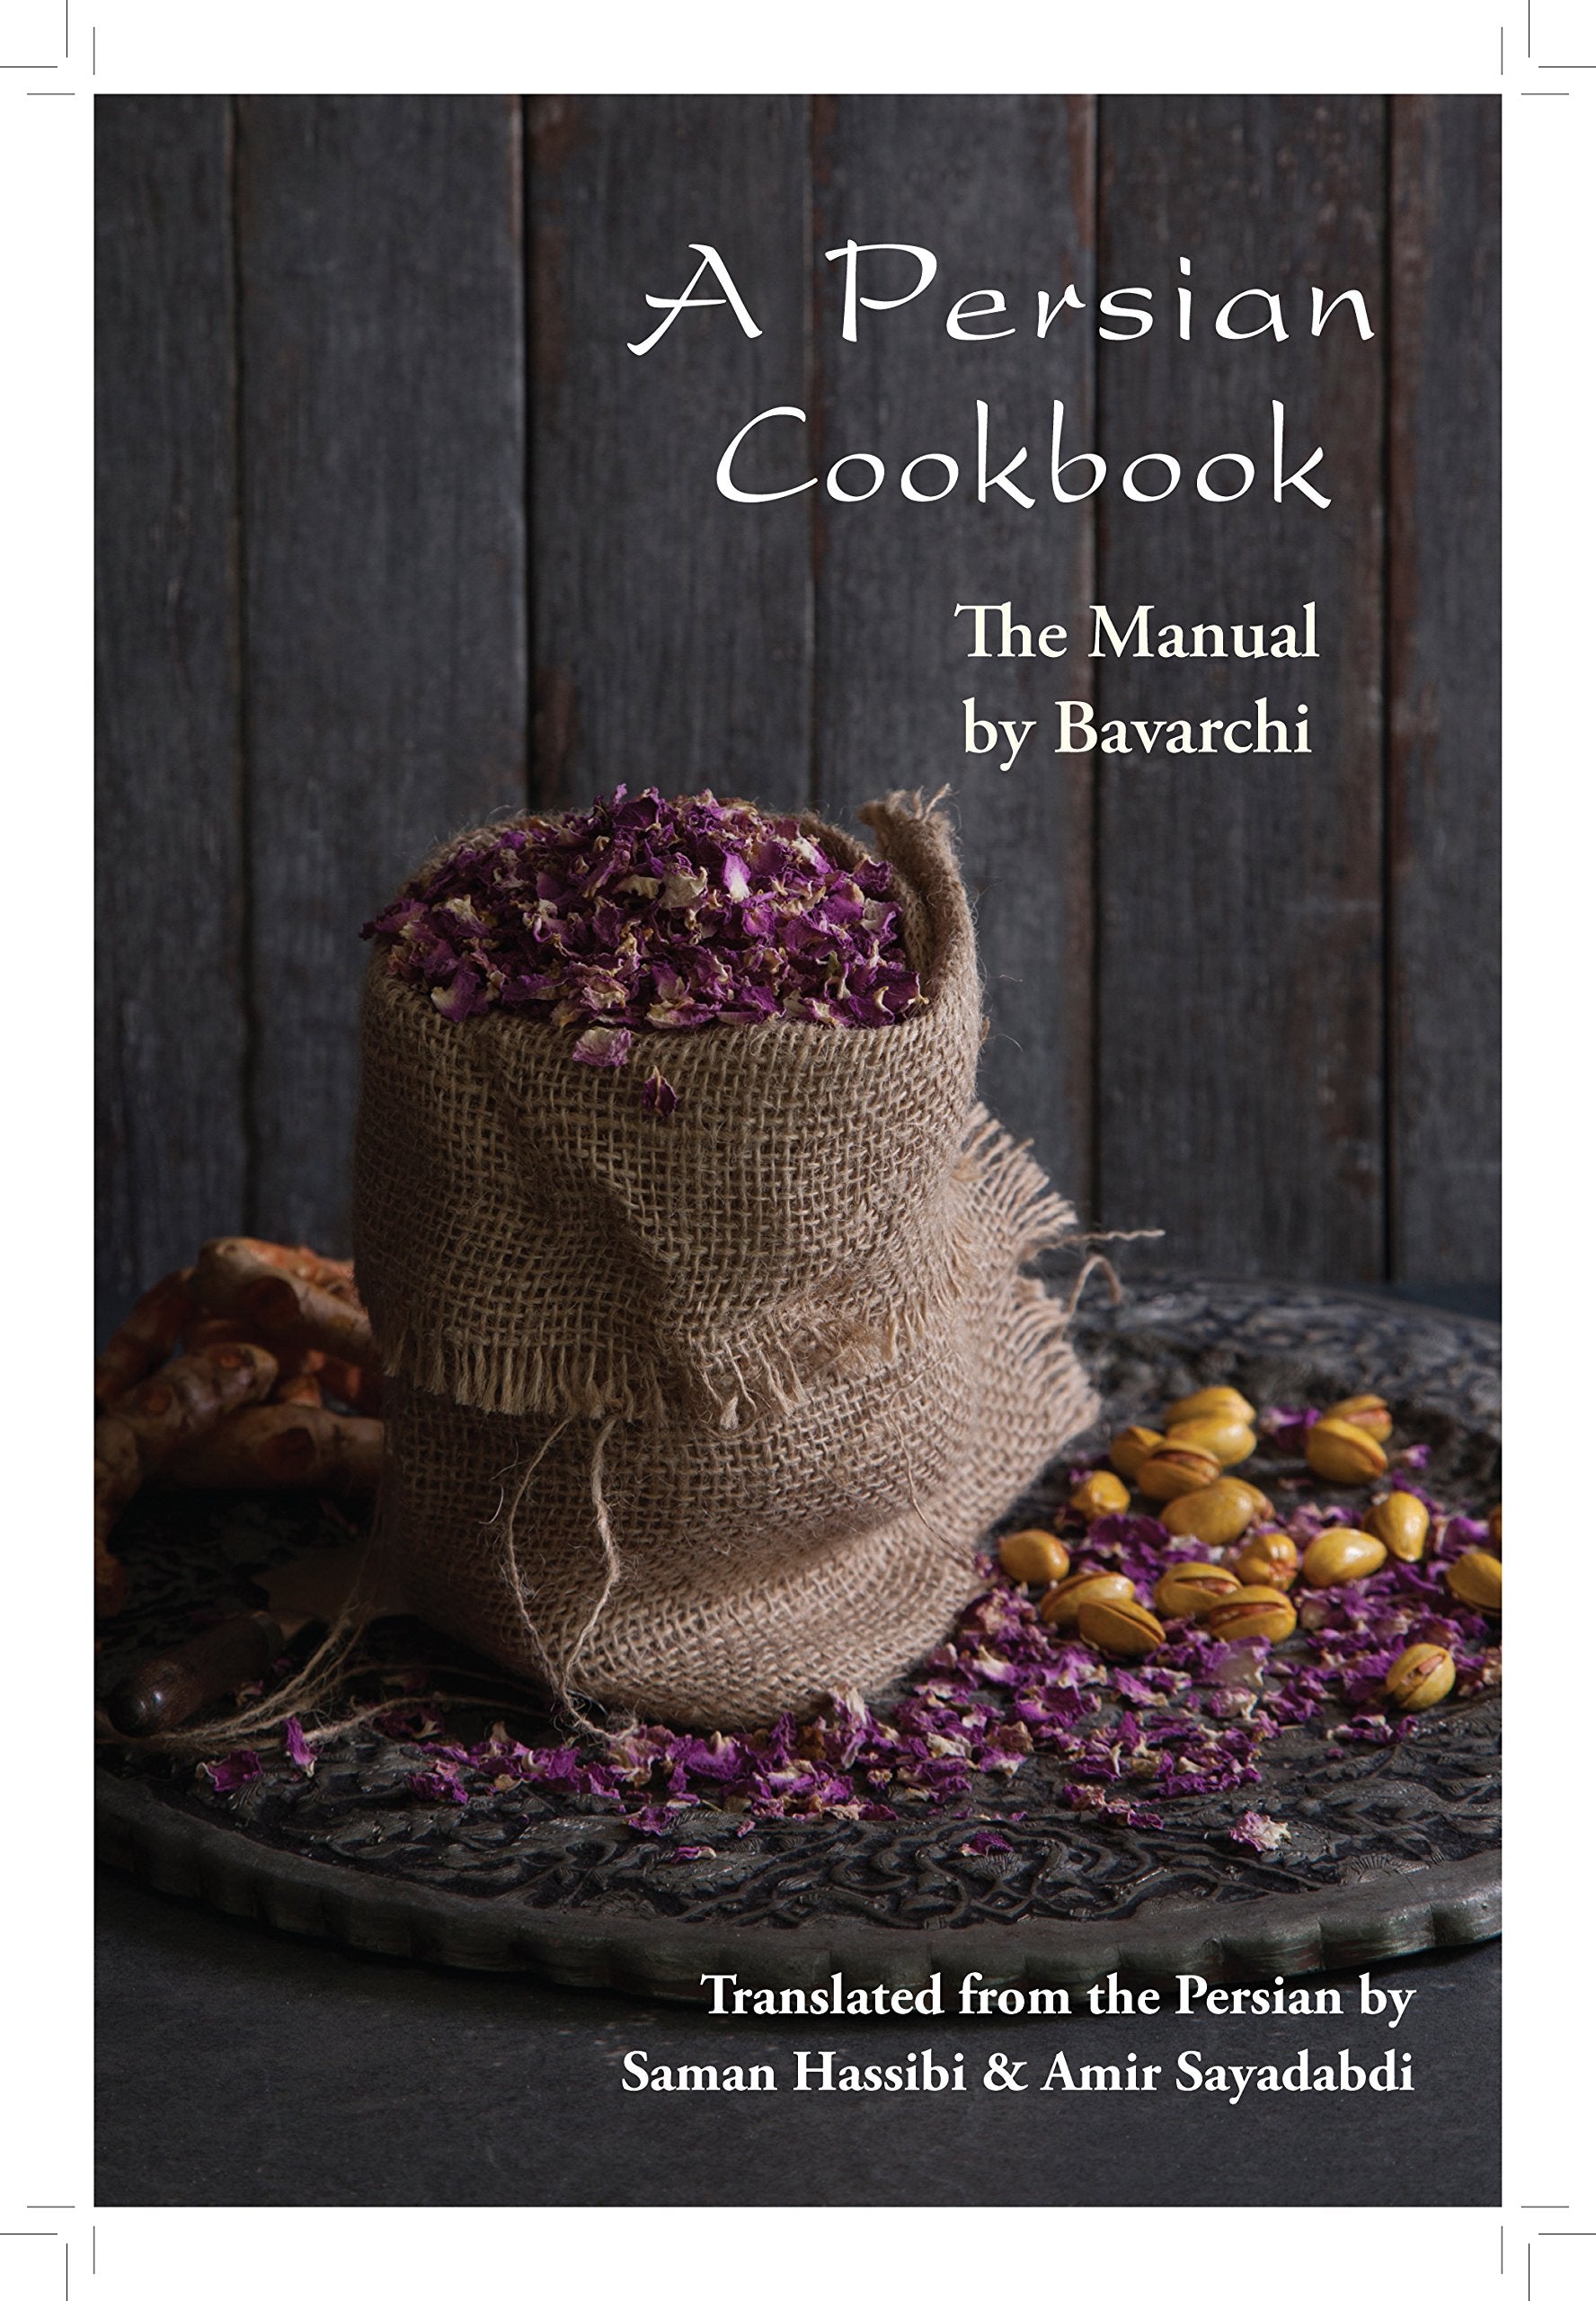 A Persian Cookbook: The Manual by Bavarchi (Saman Hassibi, Amir Sayadabdi)